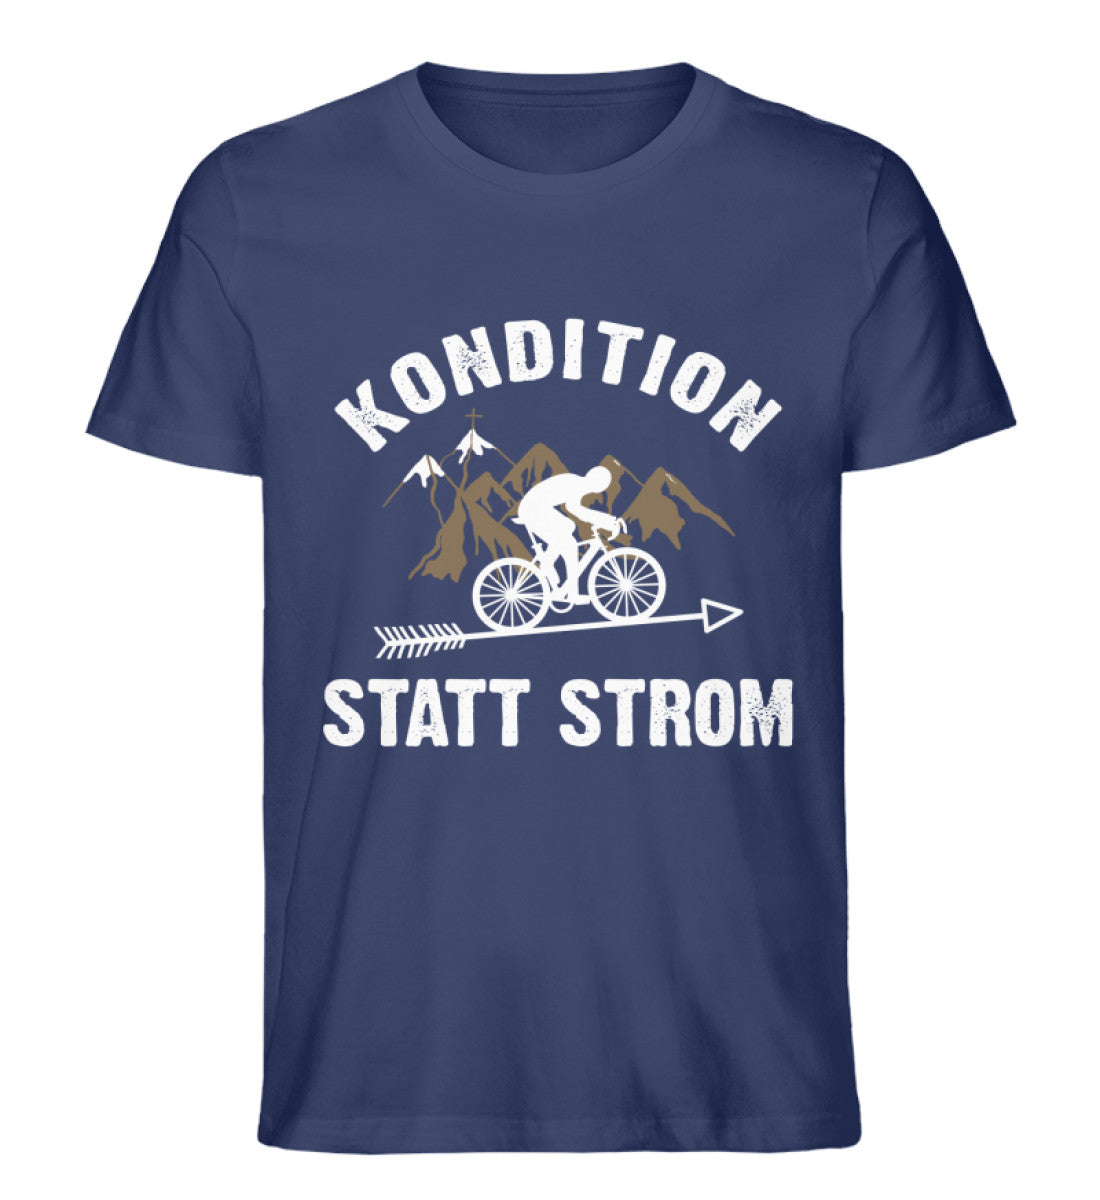 Kondition statt Strom - Herren Organic T-Shirt fahrrad mountainbike Navyblau